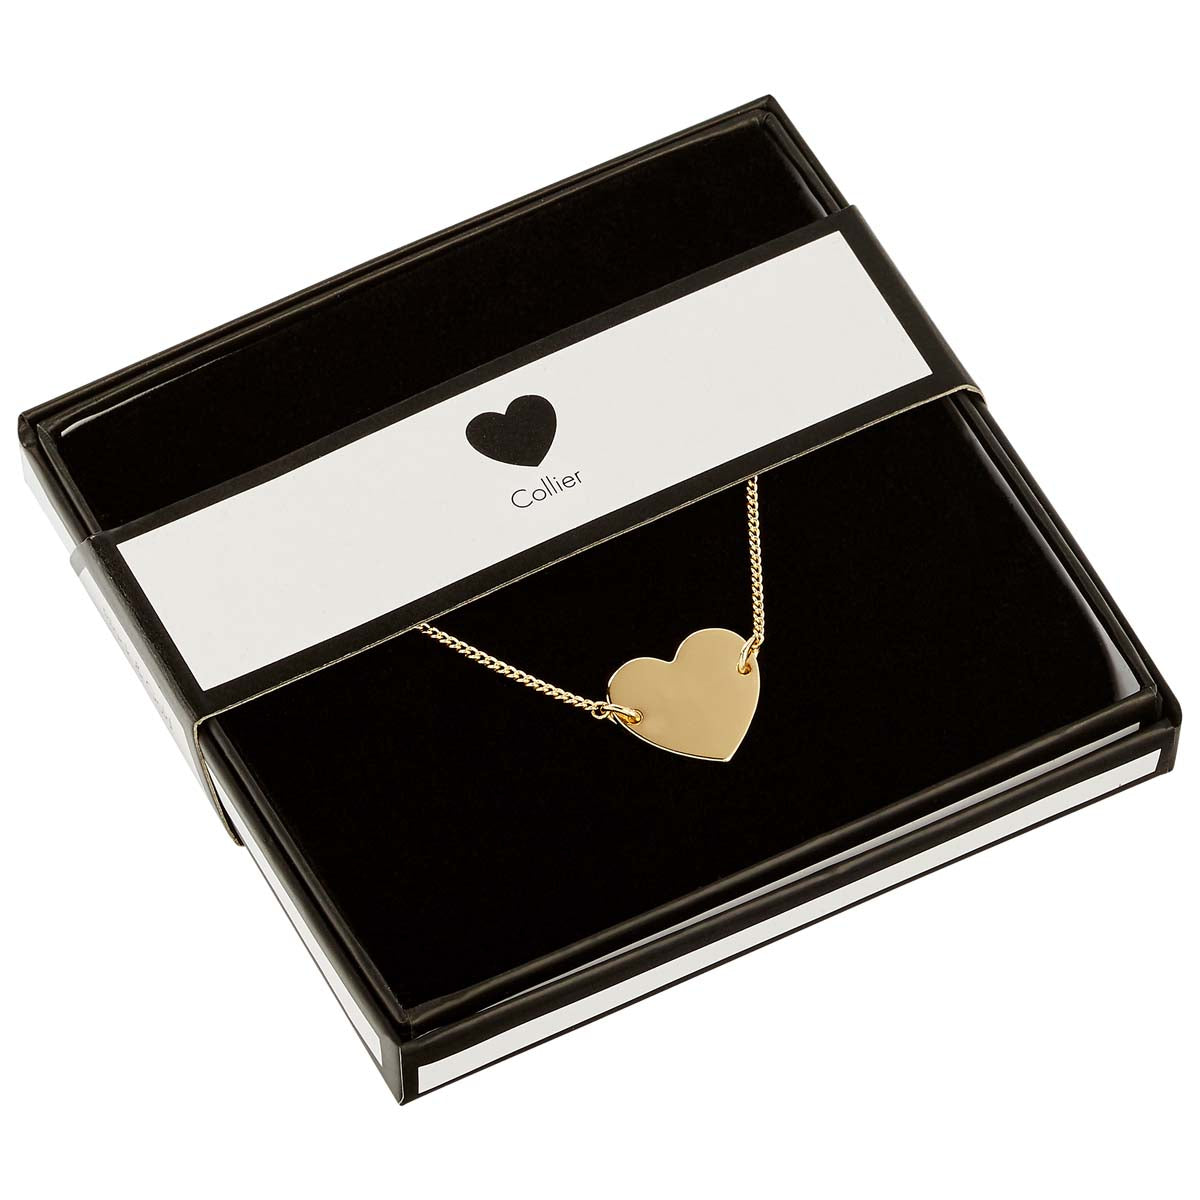 Original Heart Necklace 1 - Gold